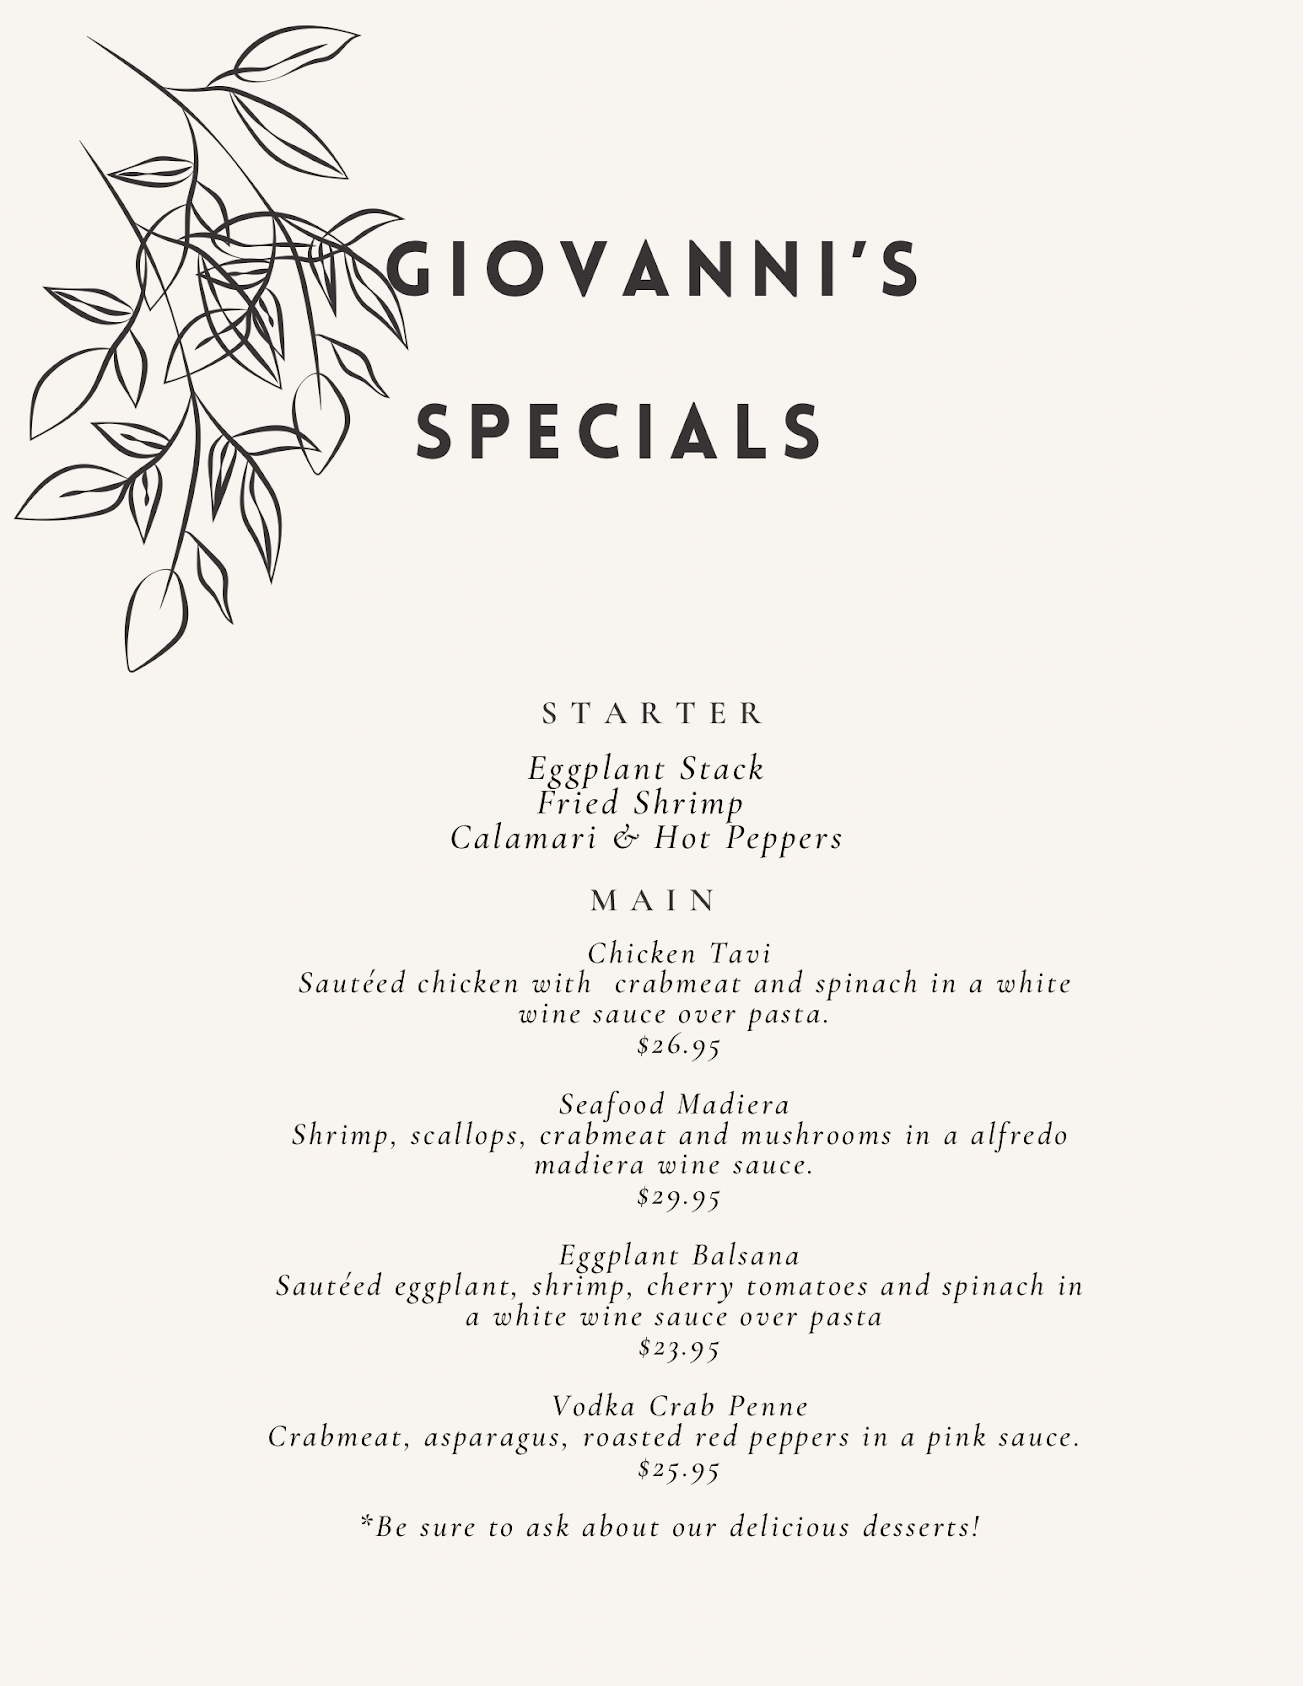 A menu for giovanni's specials.